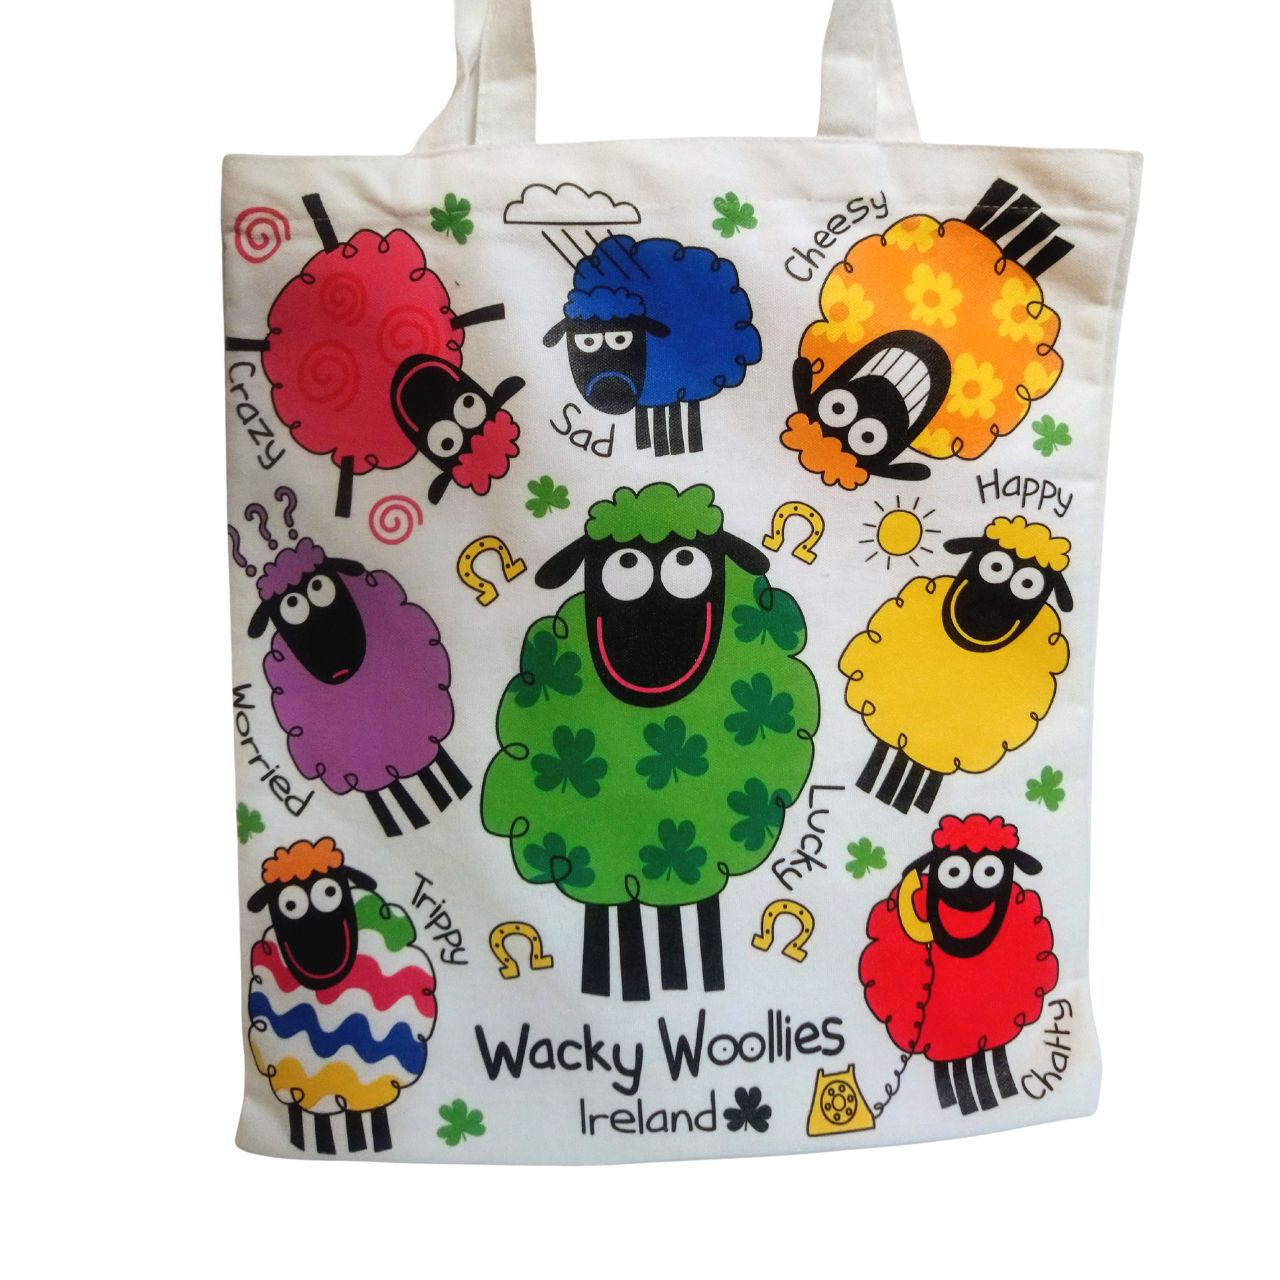 Wacky Woollies Sheep Ireland Cotton Bag  Wacky Woollies collection  Fold Up Shopping Bag